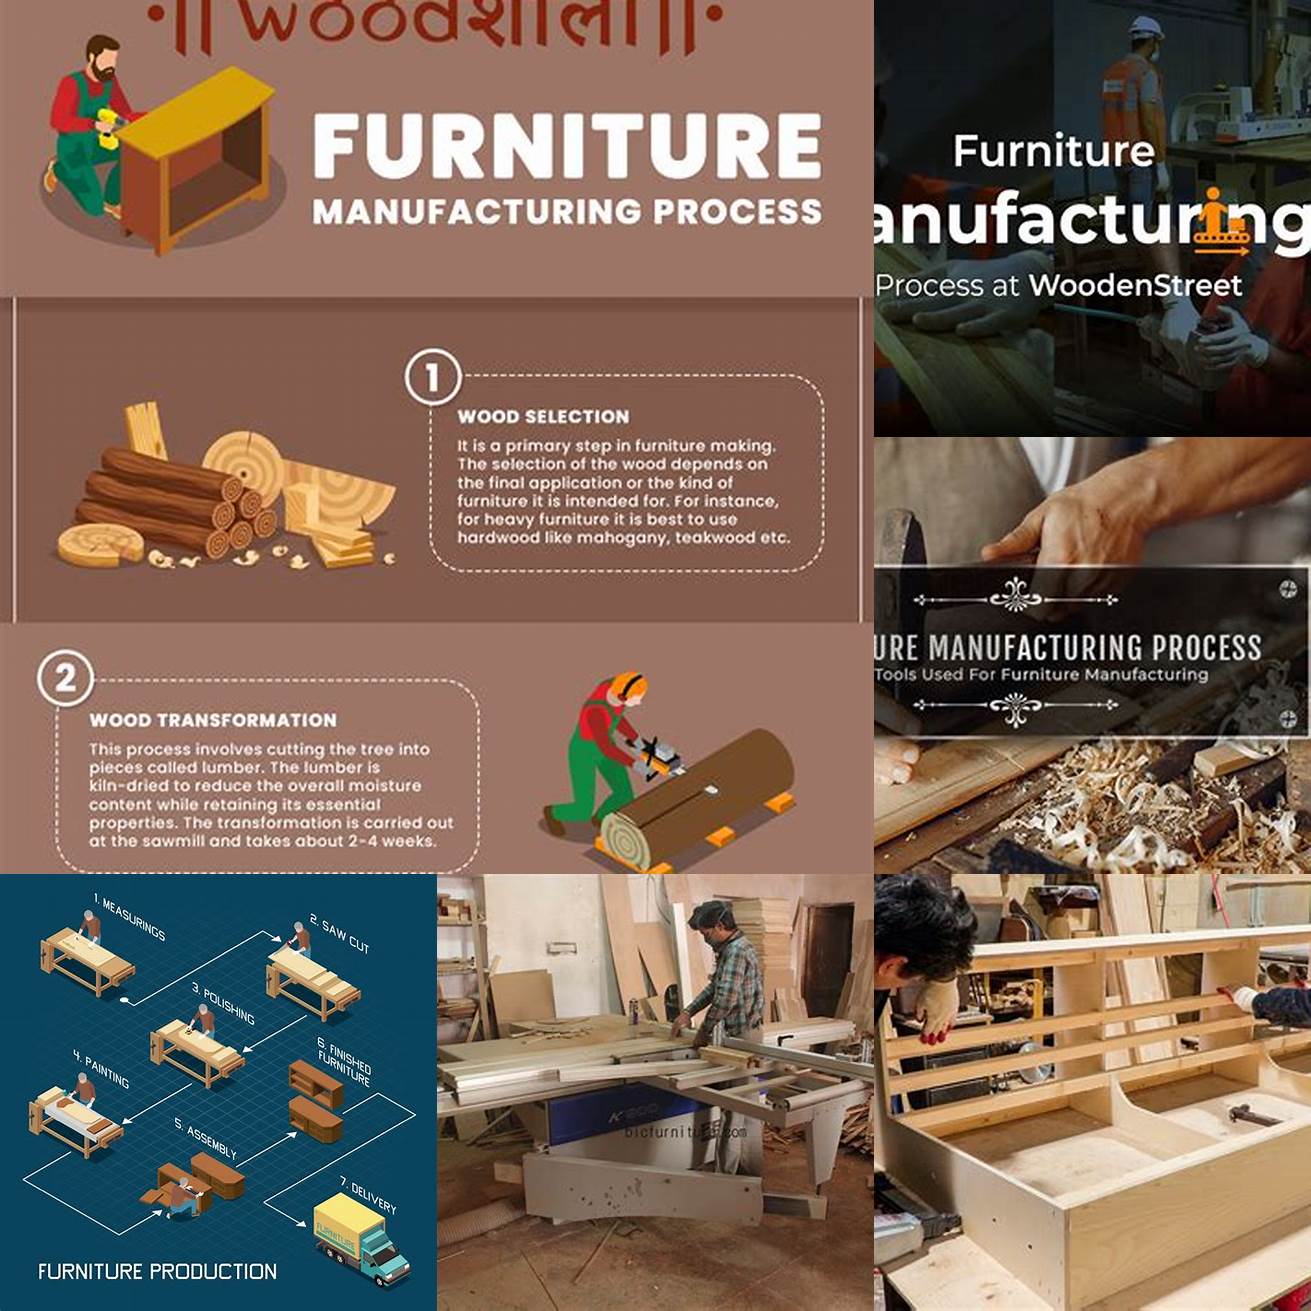 Teak Furniture Manufacturing Process